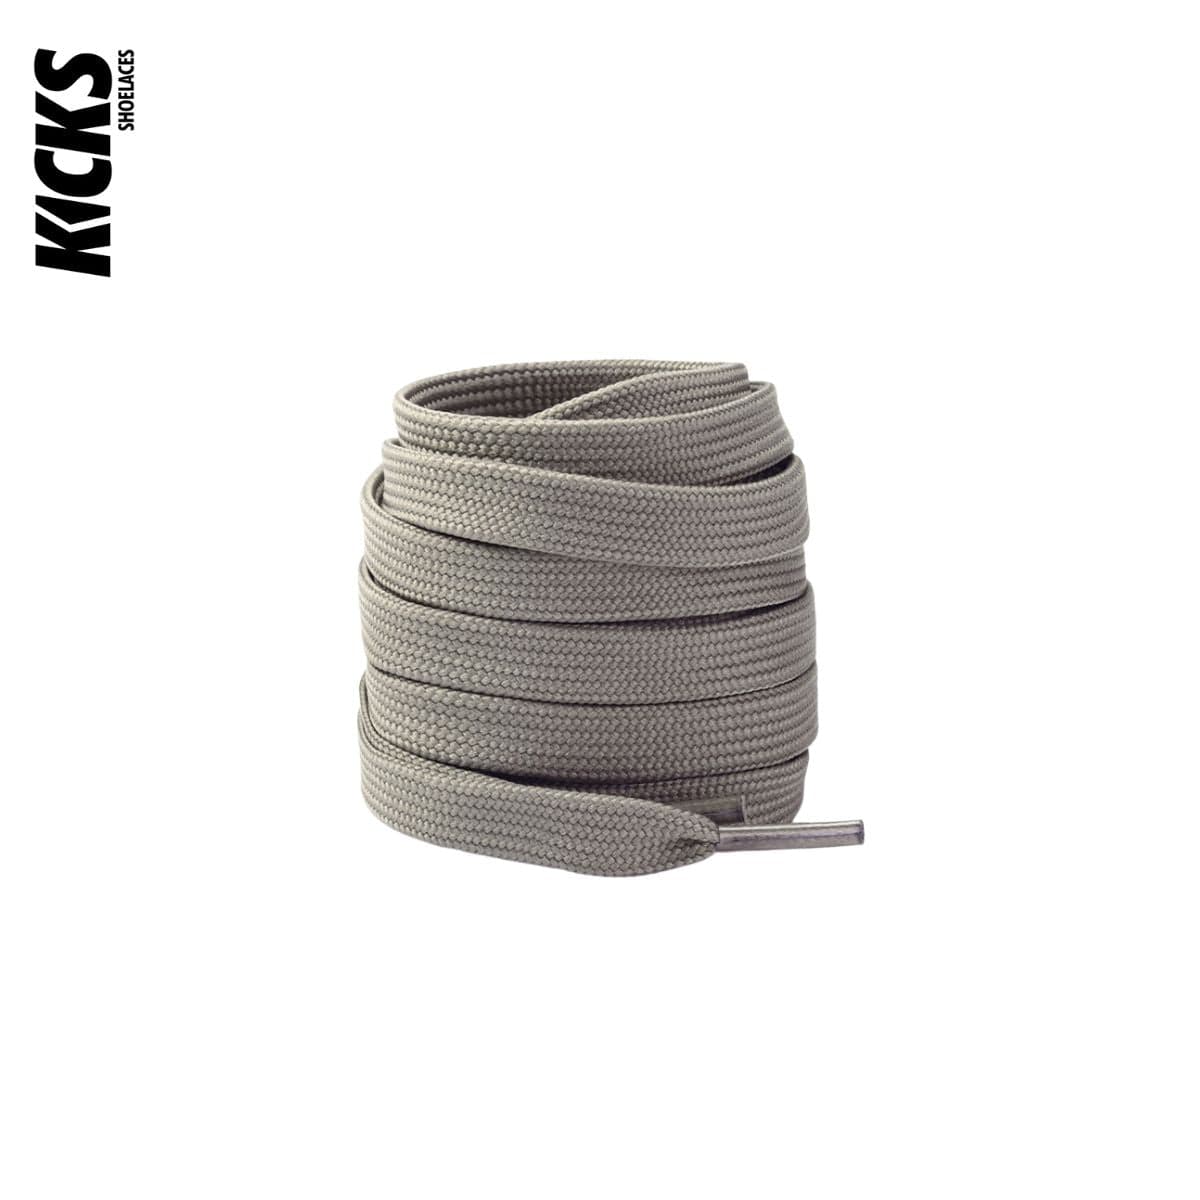 Bone Nike Dunks Shoelace Replacements - Kicks Shoelaces